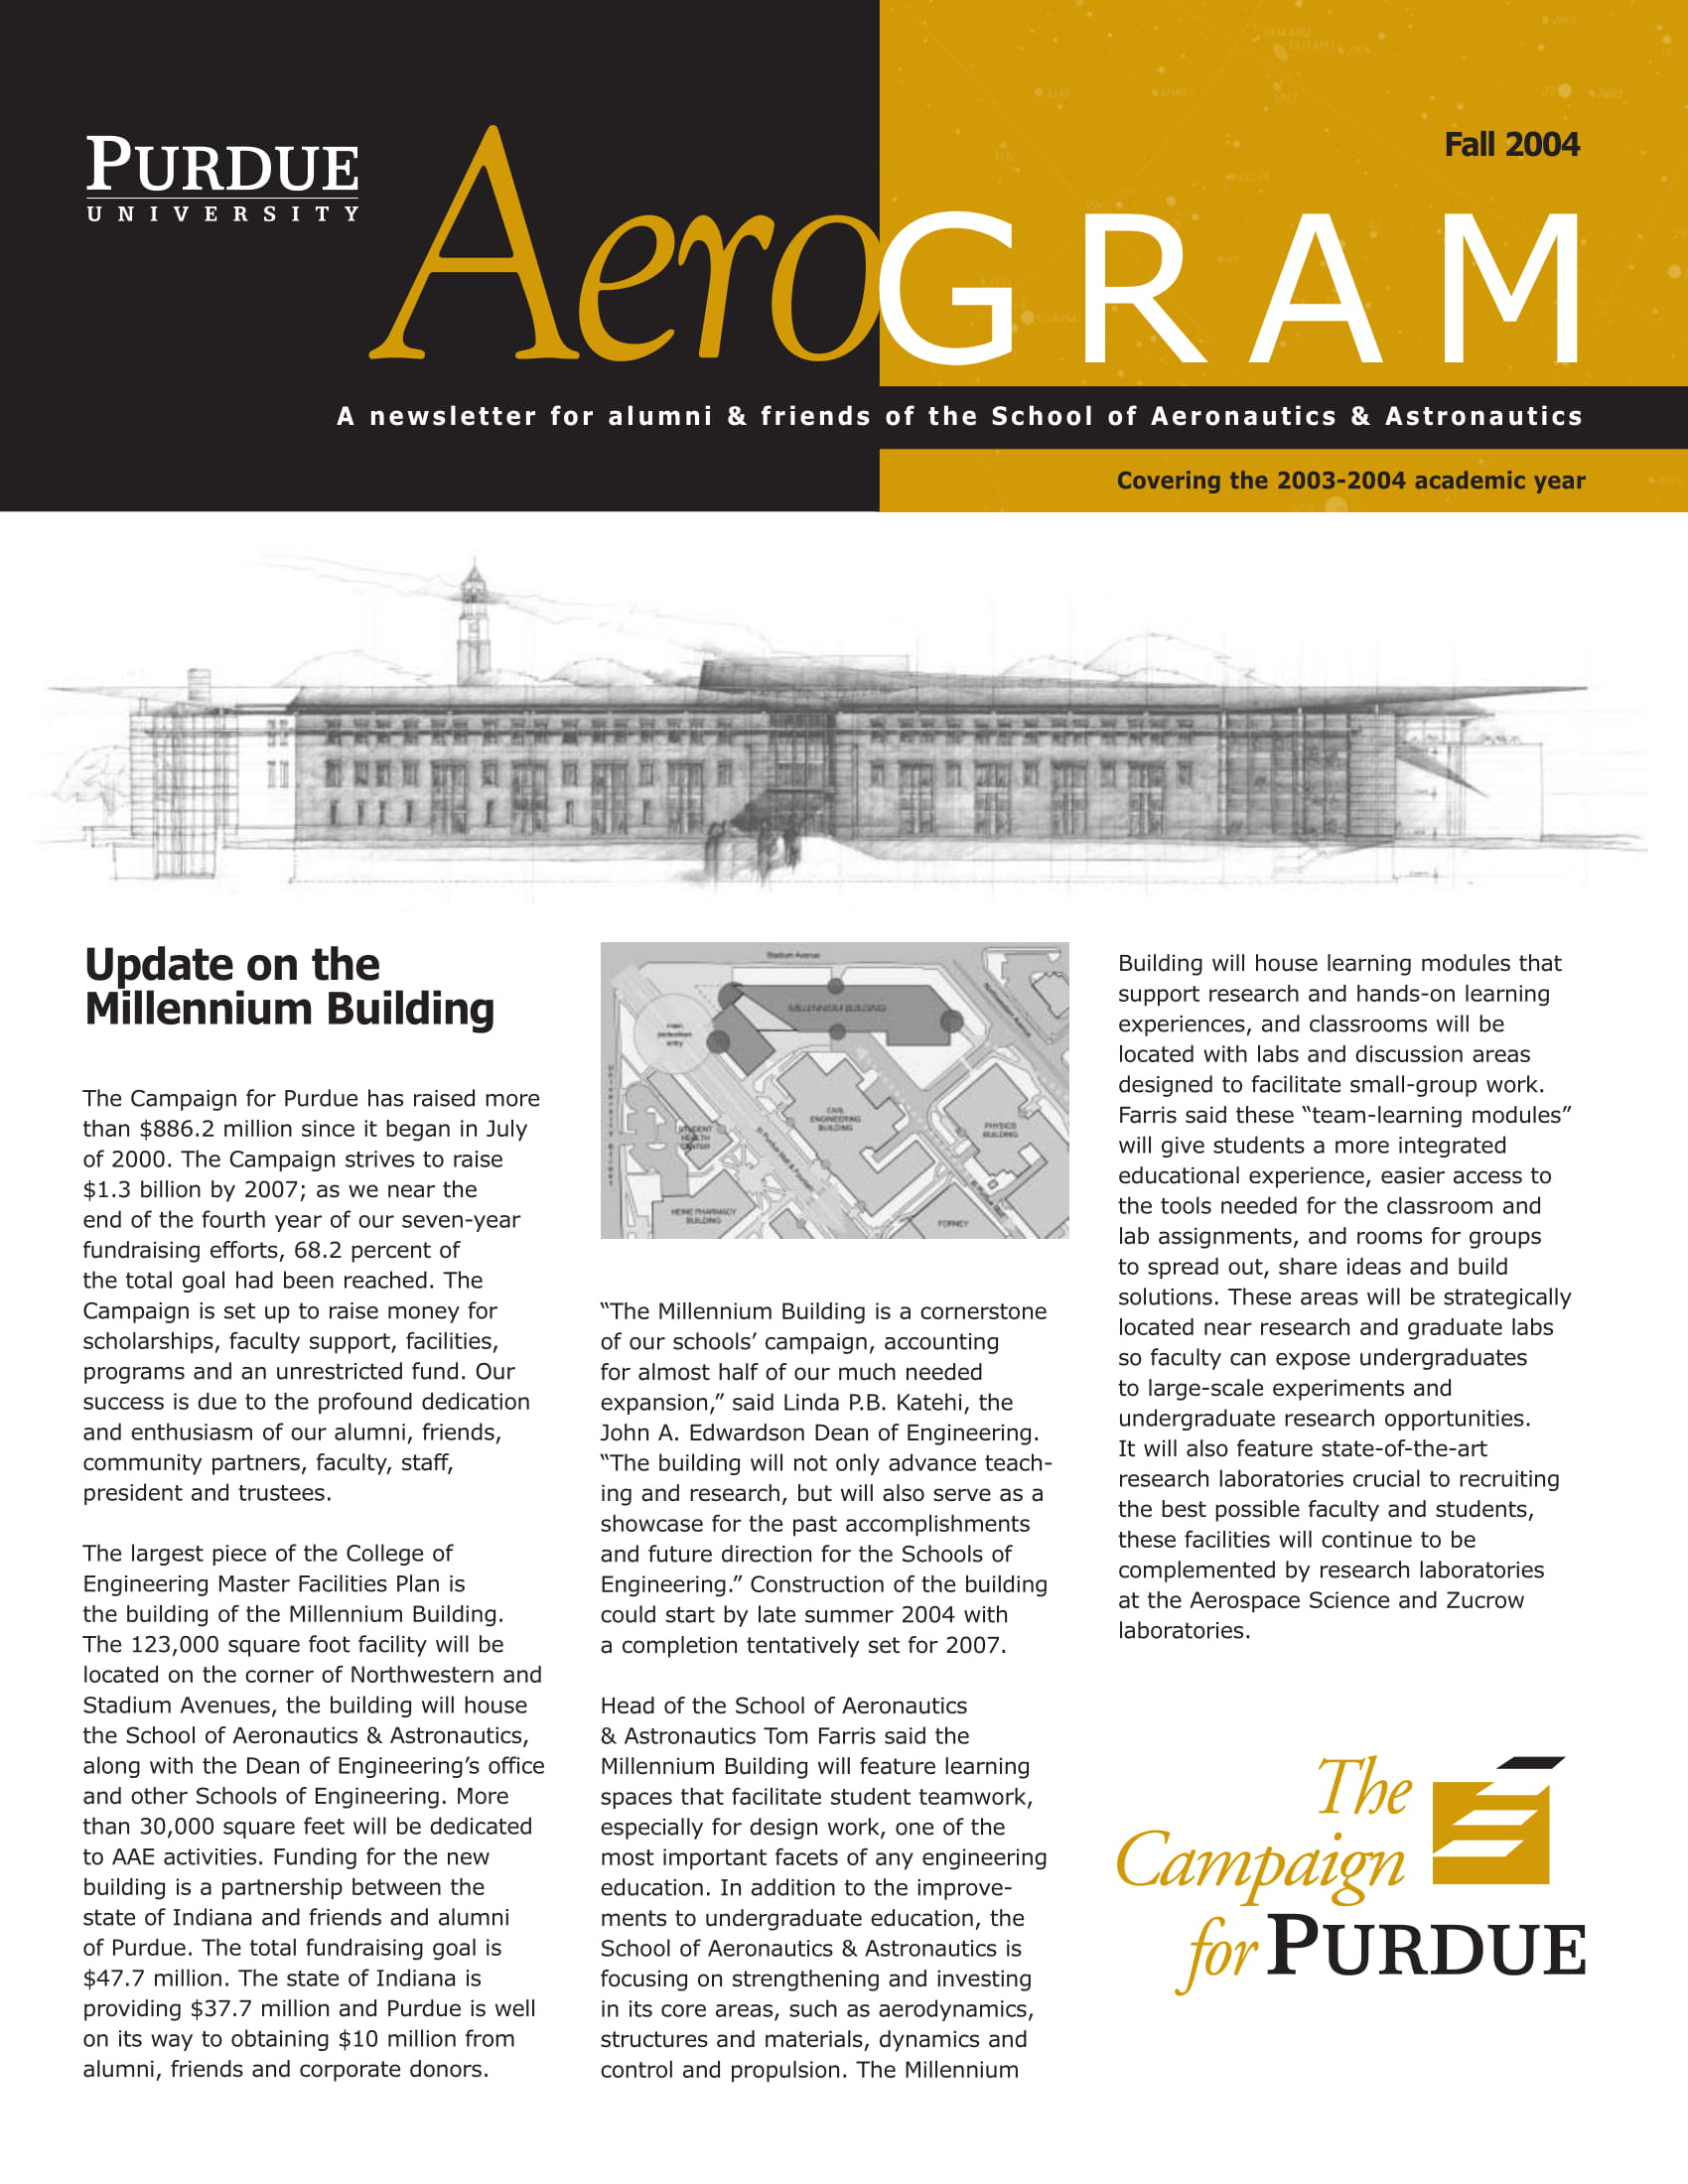 Aerogram magazine, Fall 2004